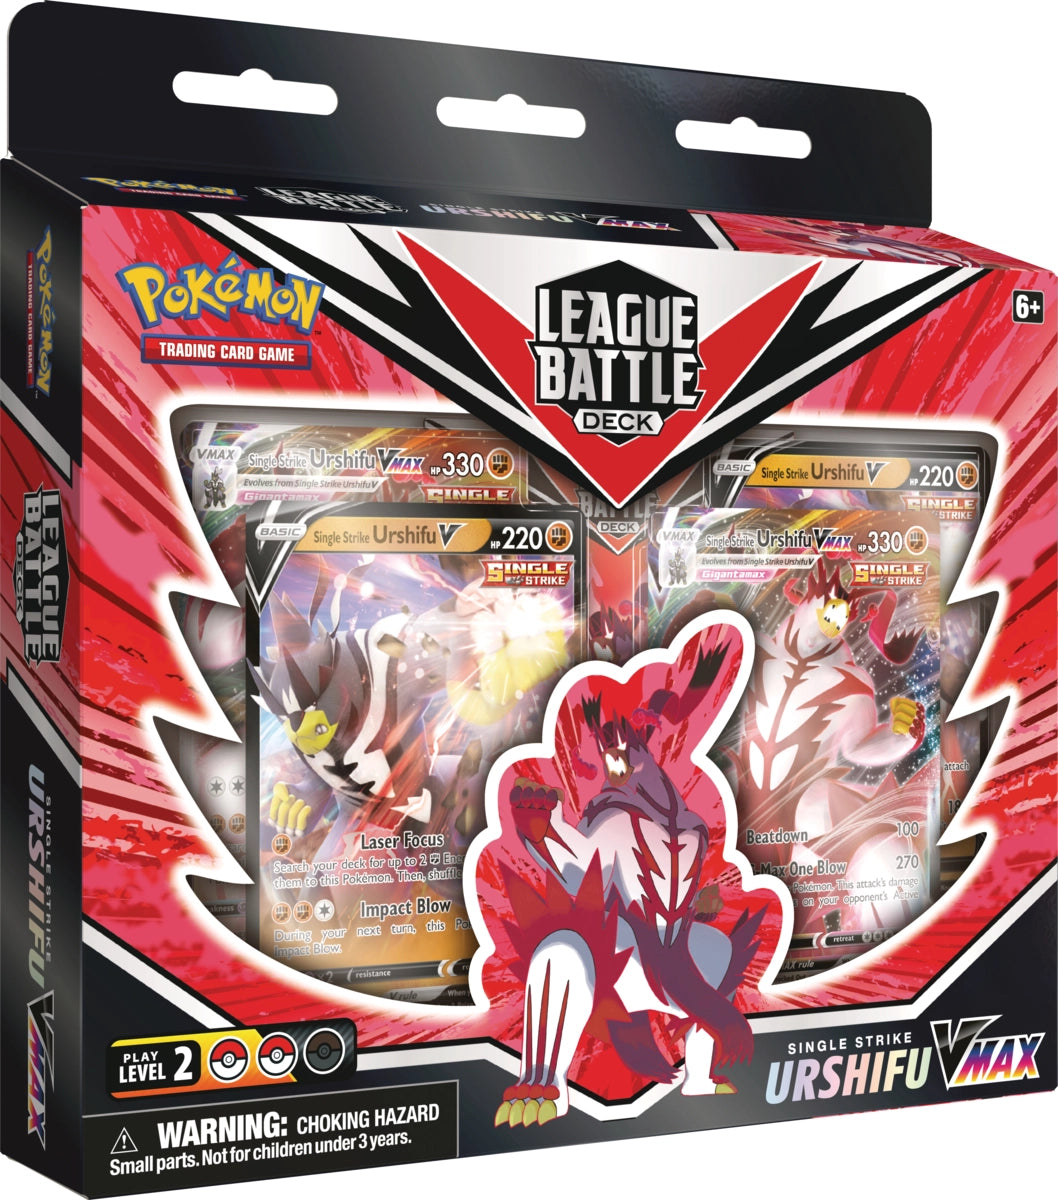 Pokémon League Battle Deck: Single/ Rapid Strike Urshifu VMAX